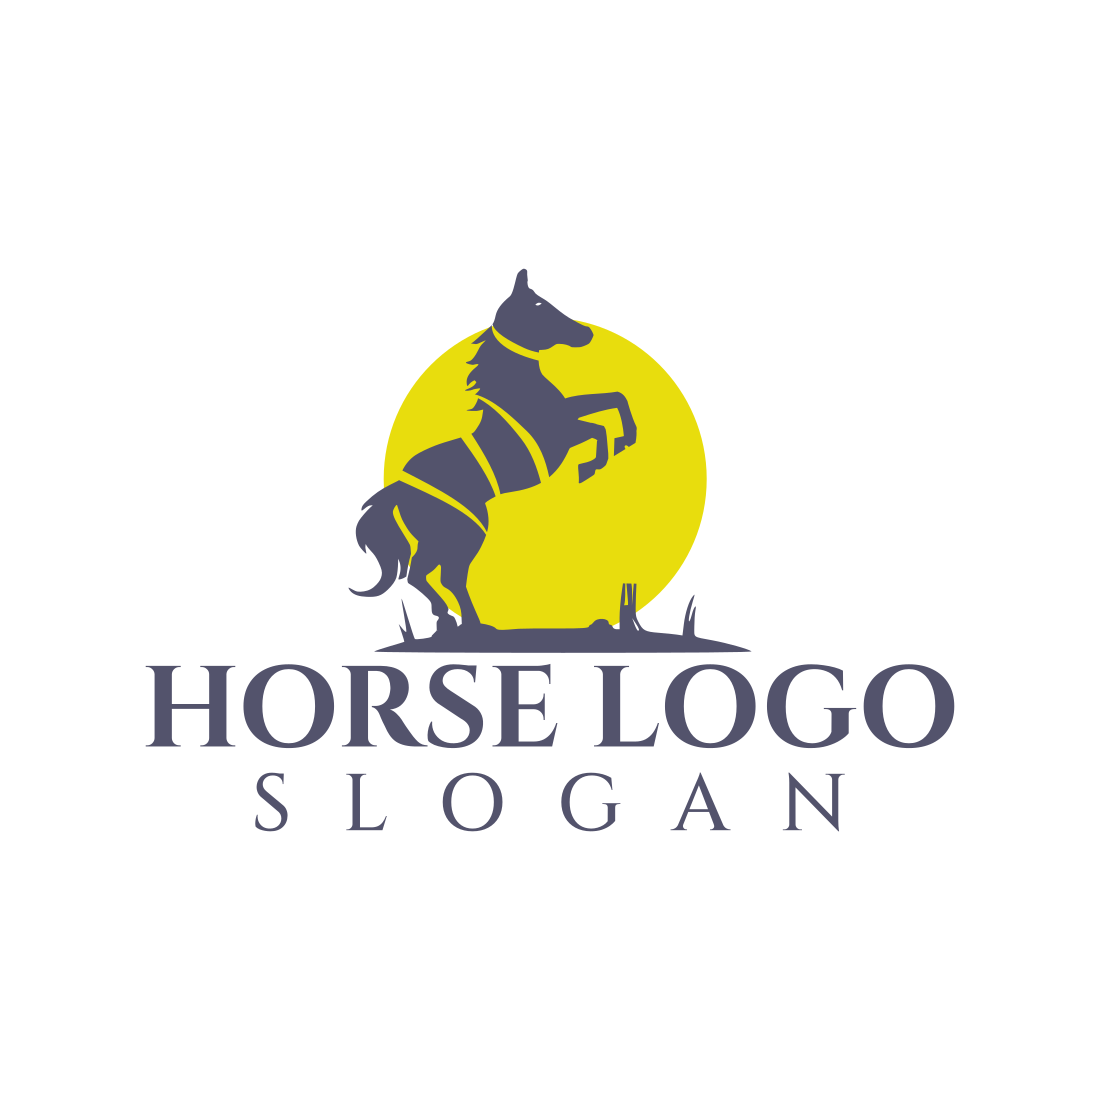 Horse Iconic Logo Design Template previews.